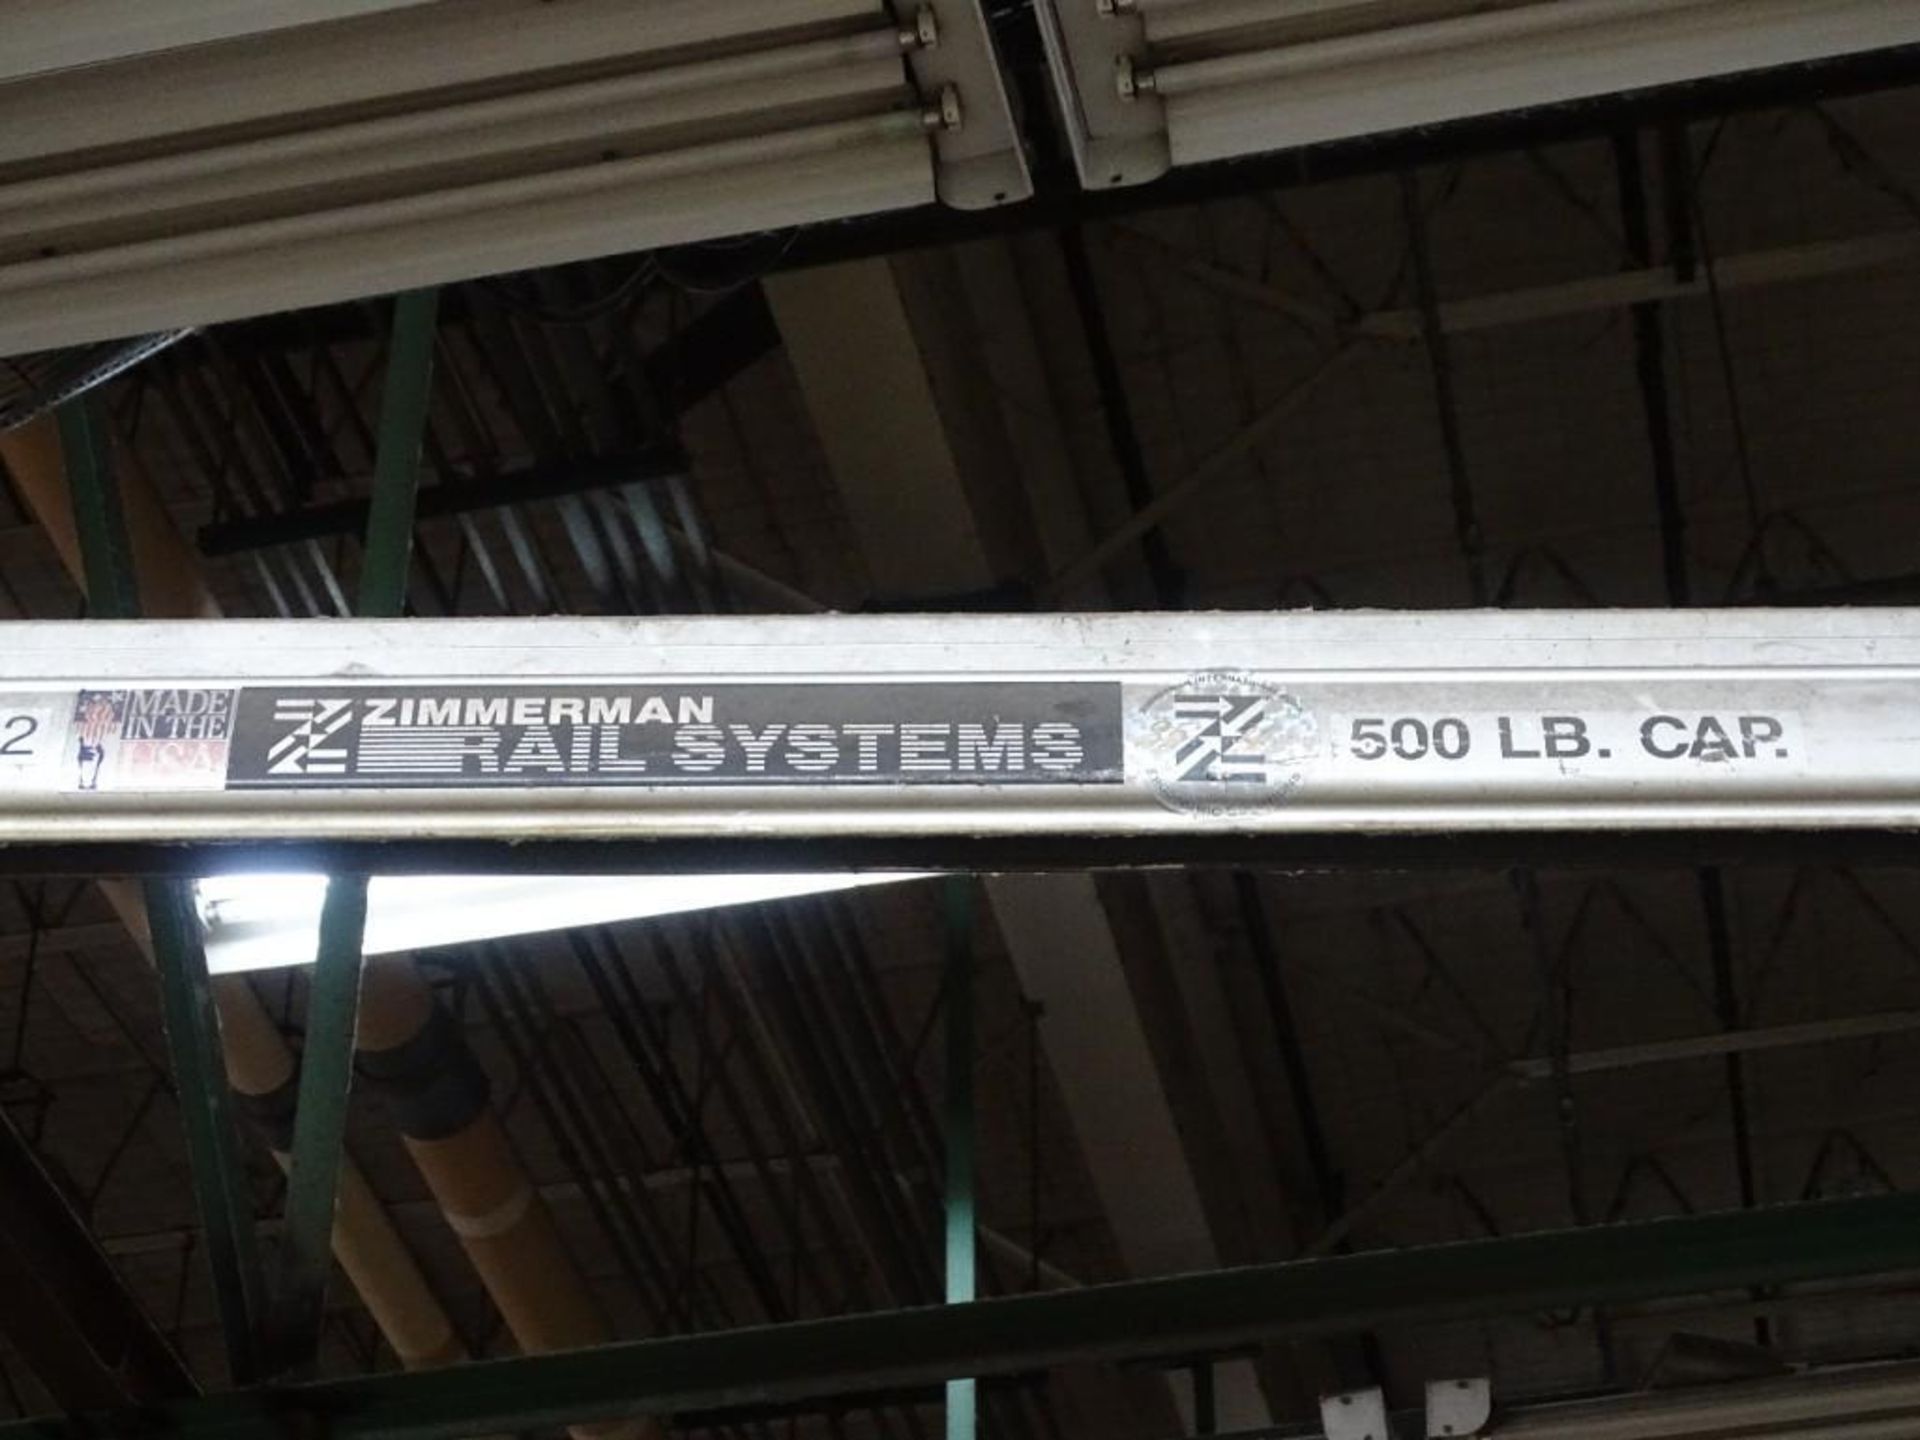 Zimmerman Rail System for Ergonomic Lift Assist - Image 8 of 8